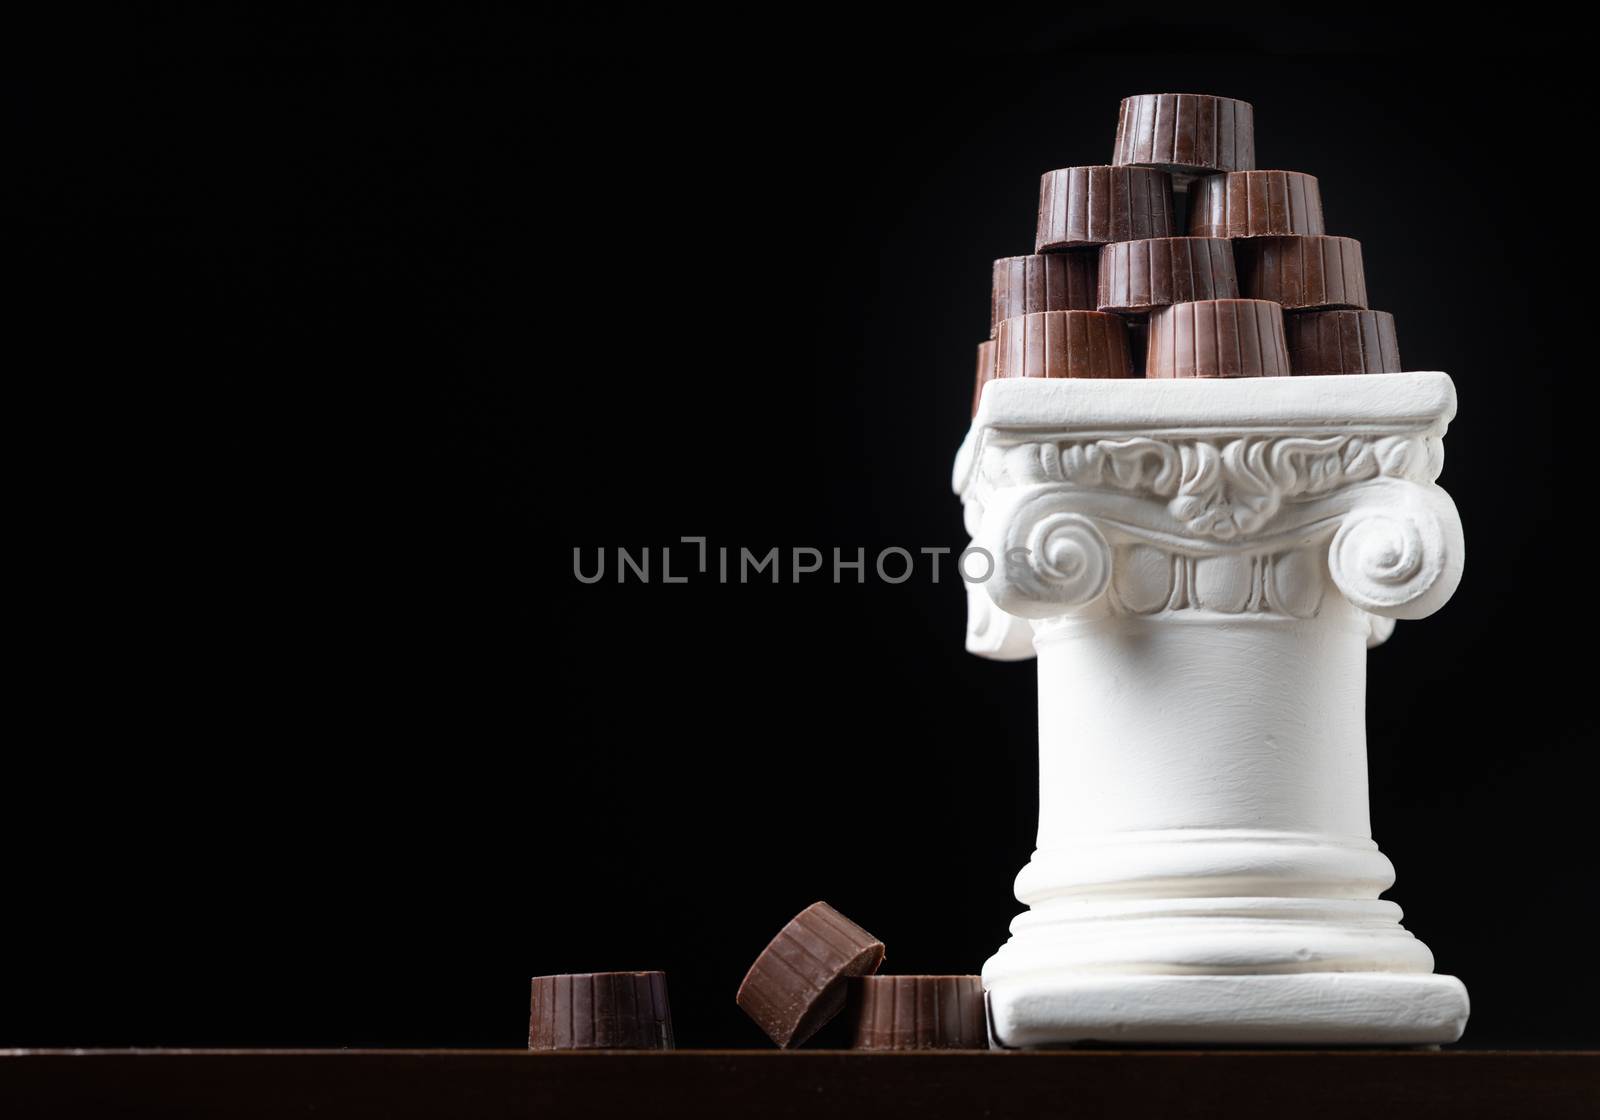 Stack of Fine Artisan Chocolates Stacked On White Pillar Column.